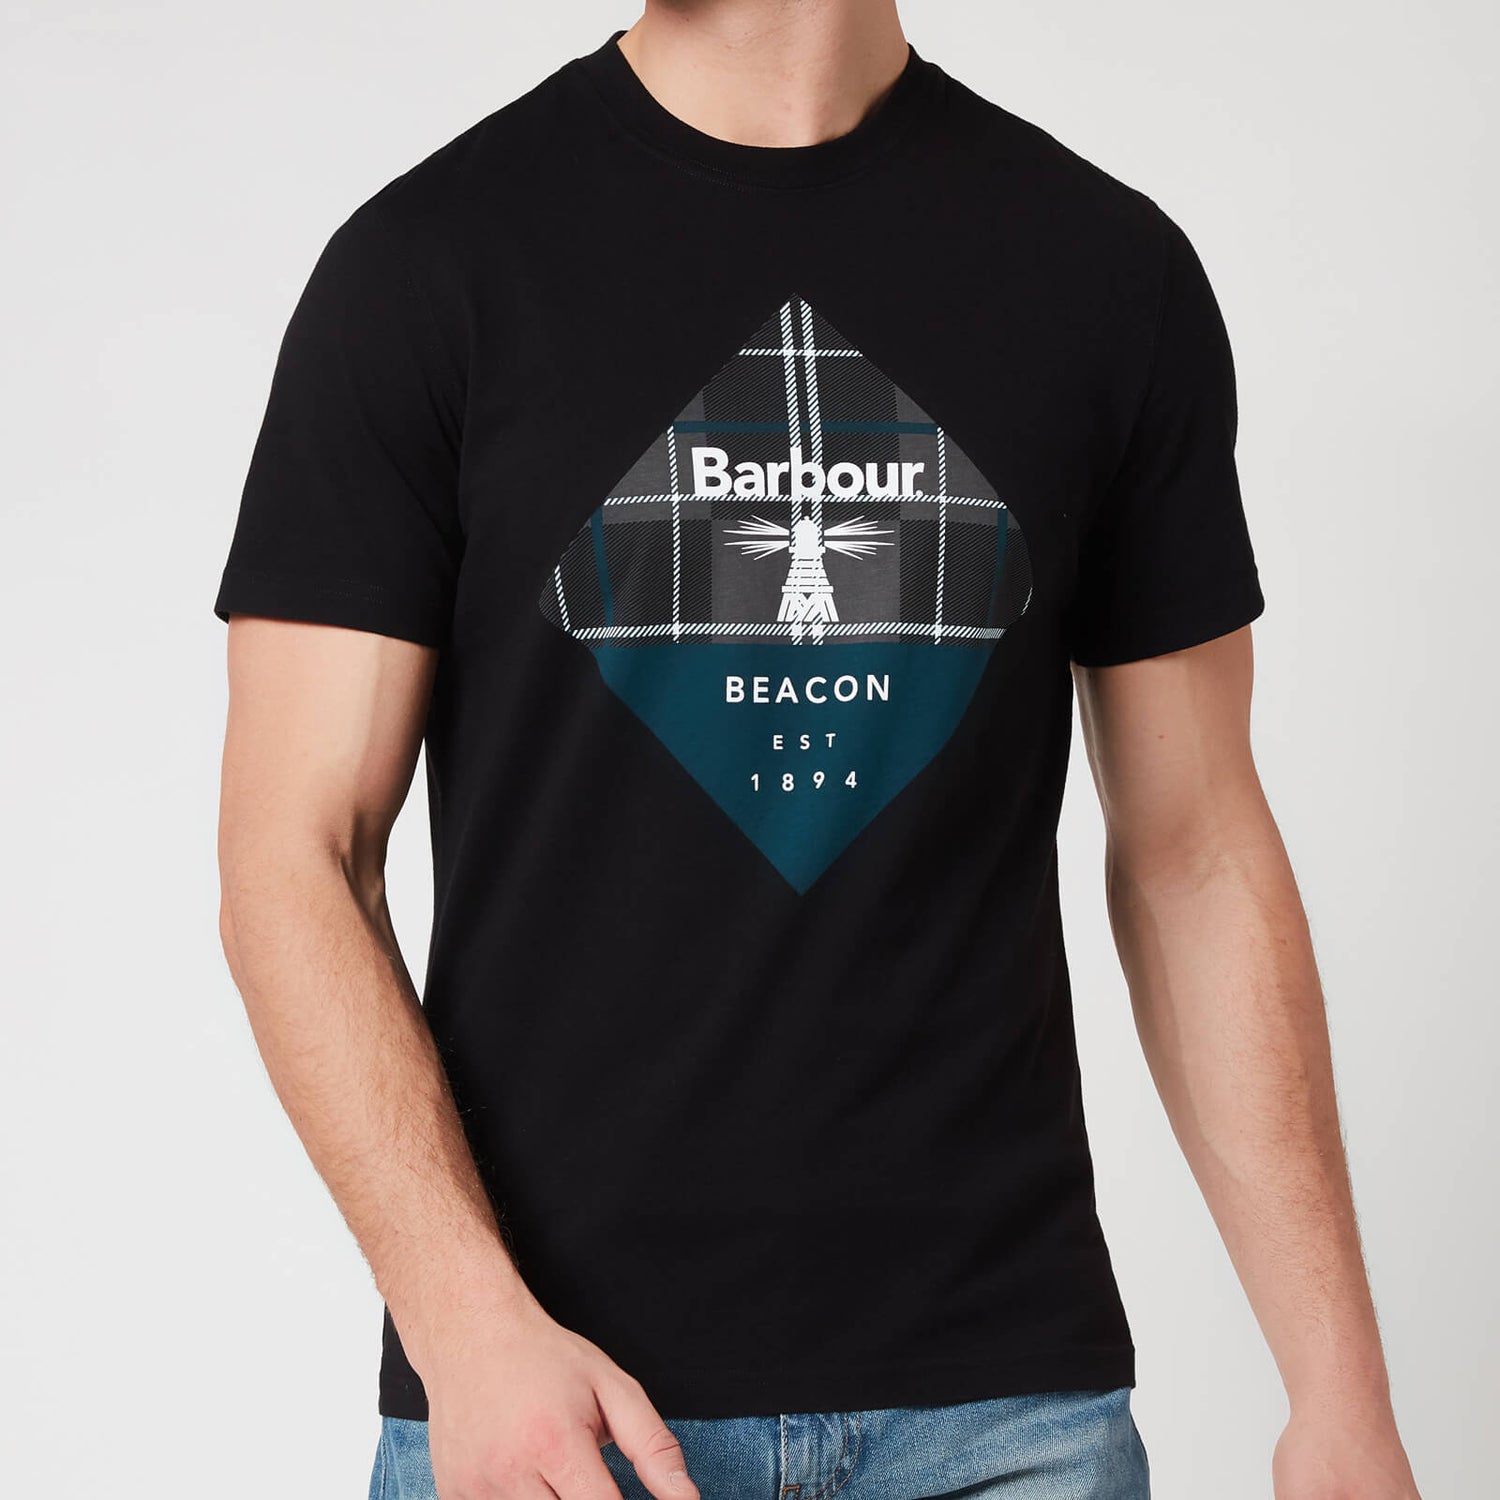 Barbour Beacon Men's Becker T-Shirt - Black